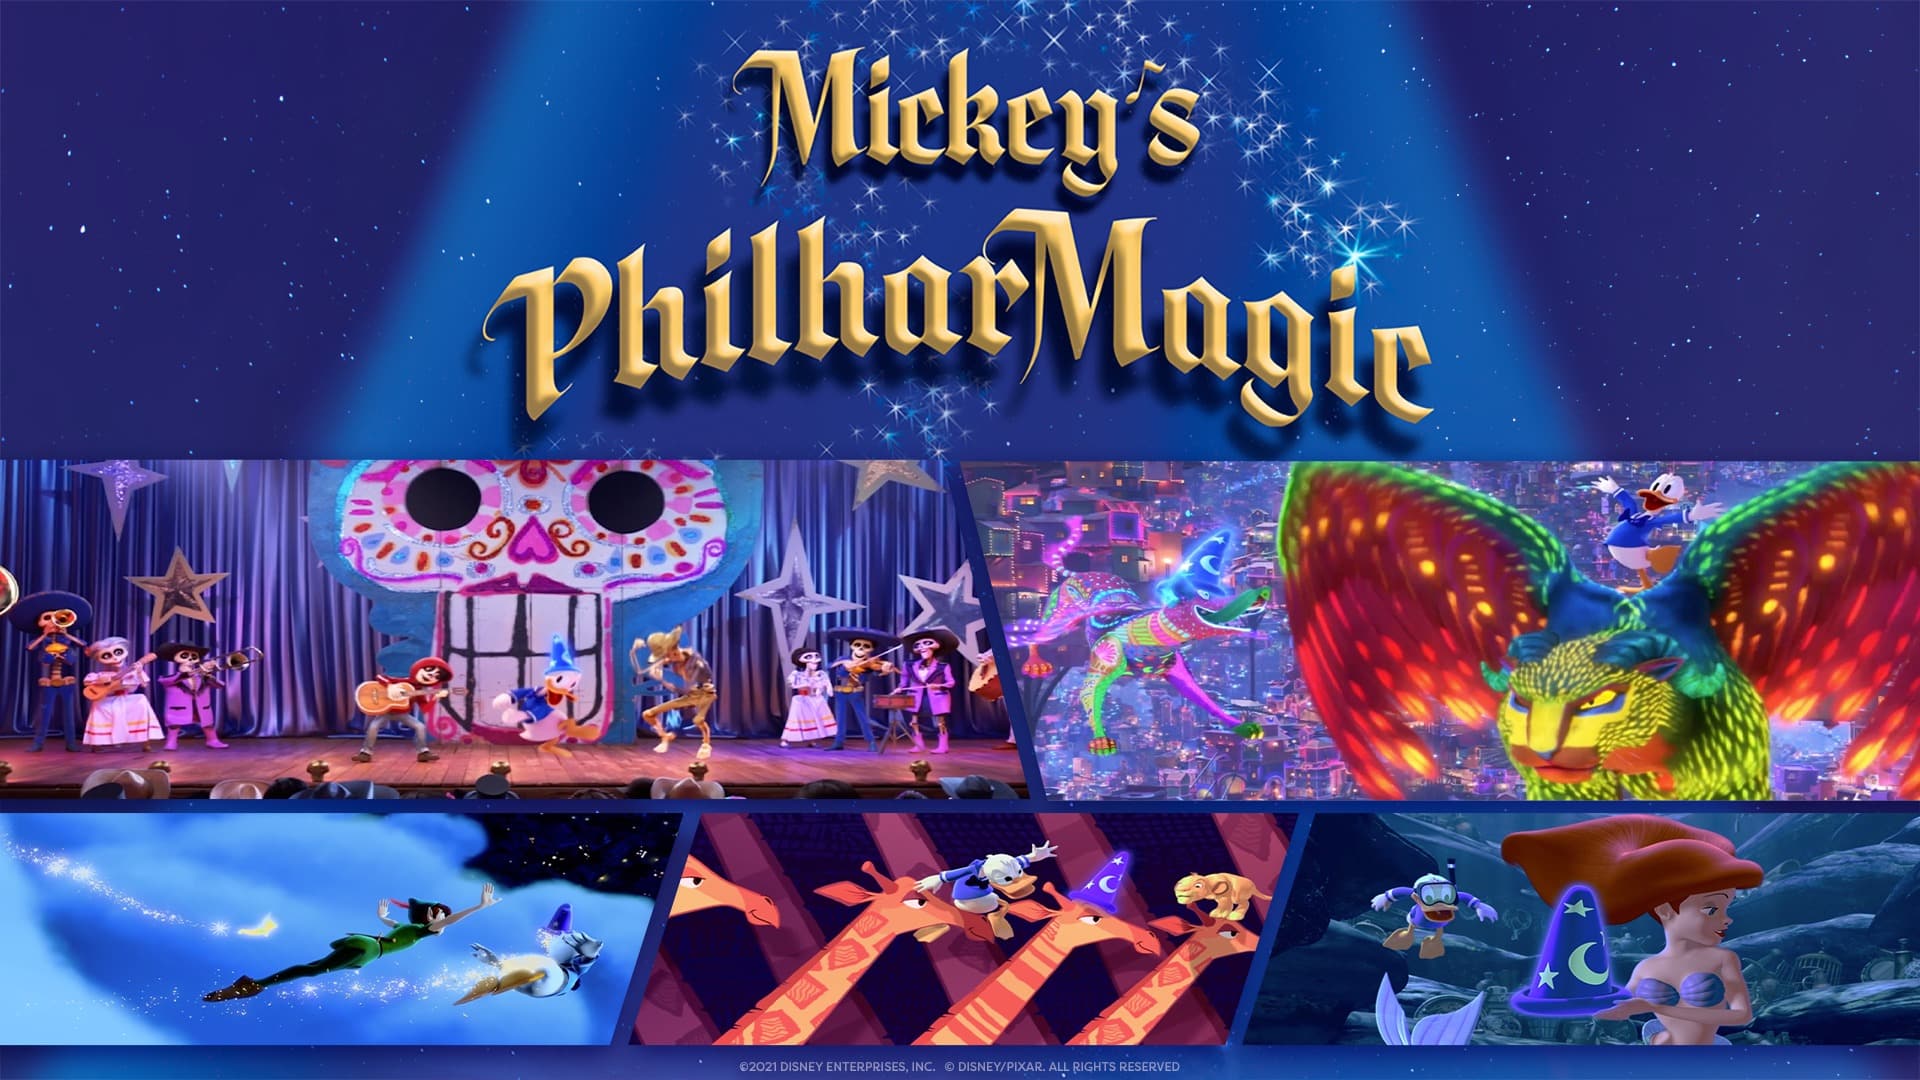 Mickeys PhilharMagic Debuts new Coco Scene Coming Soon to Walt Disney World Resort for 50th Anniversary